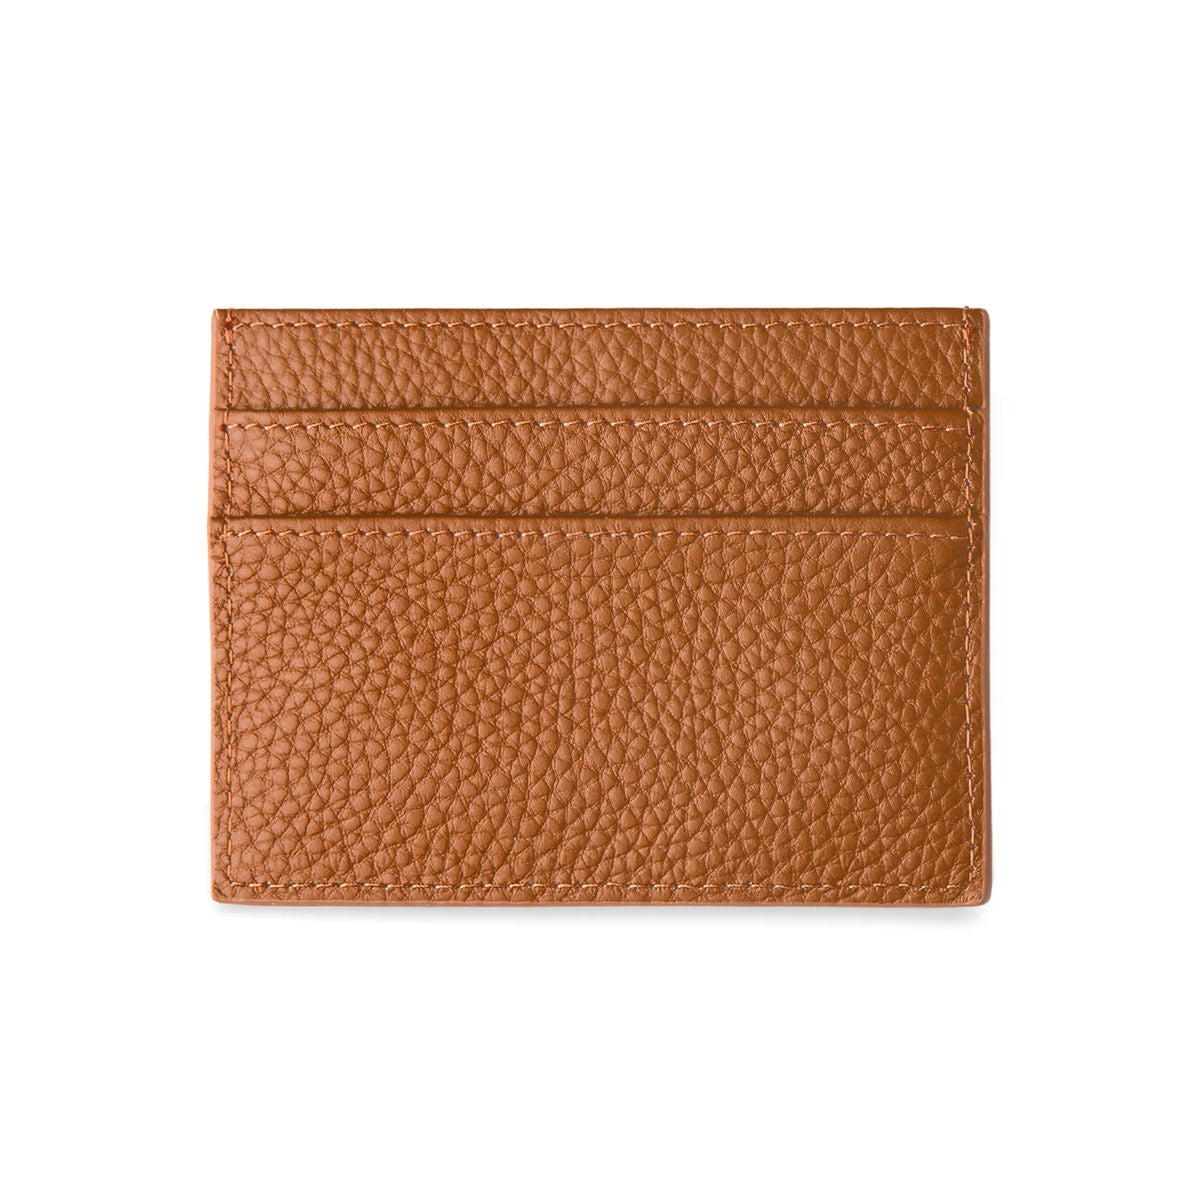 Double Cardholder - Tan Pebble Leather